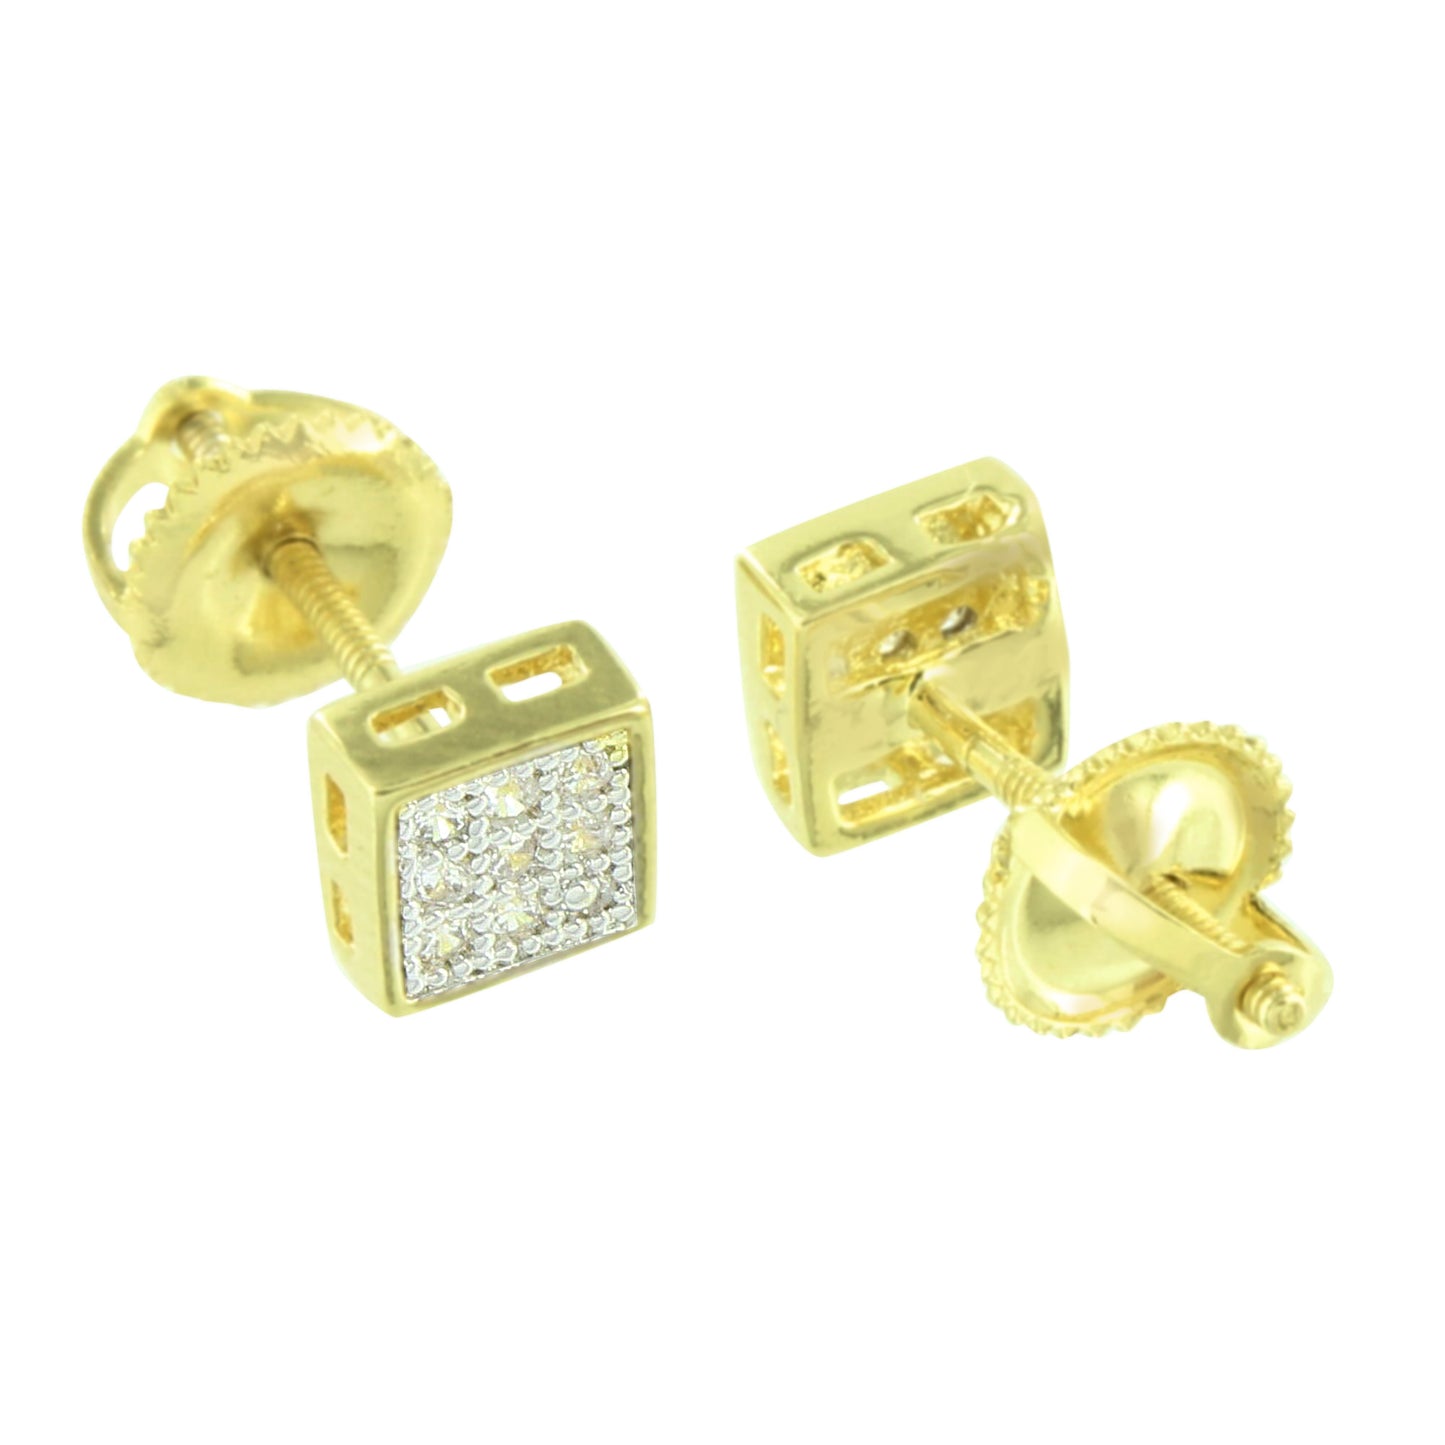 Square Gold Finish Earrings Studs